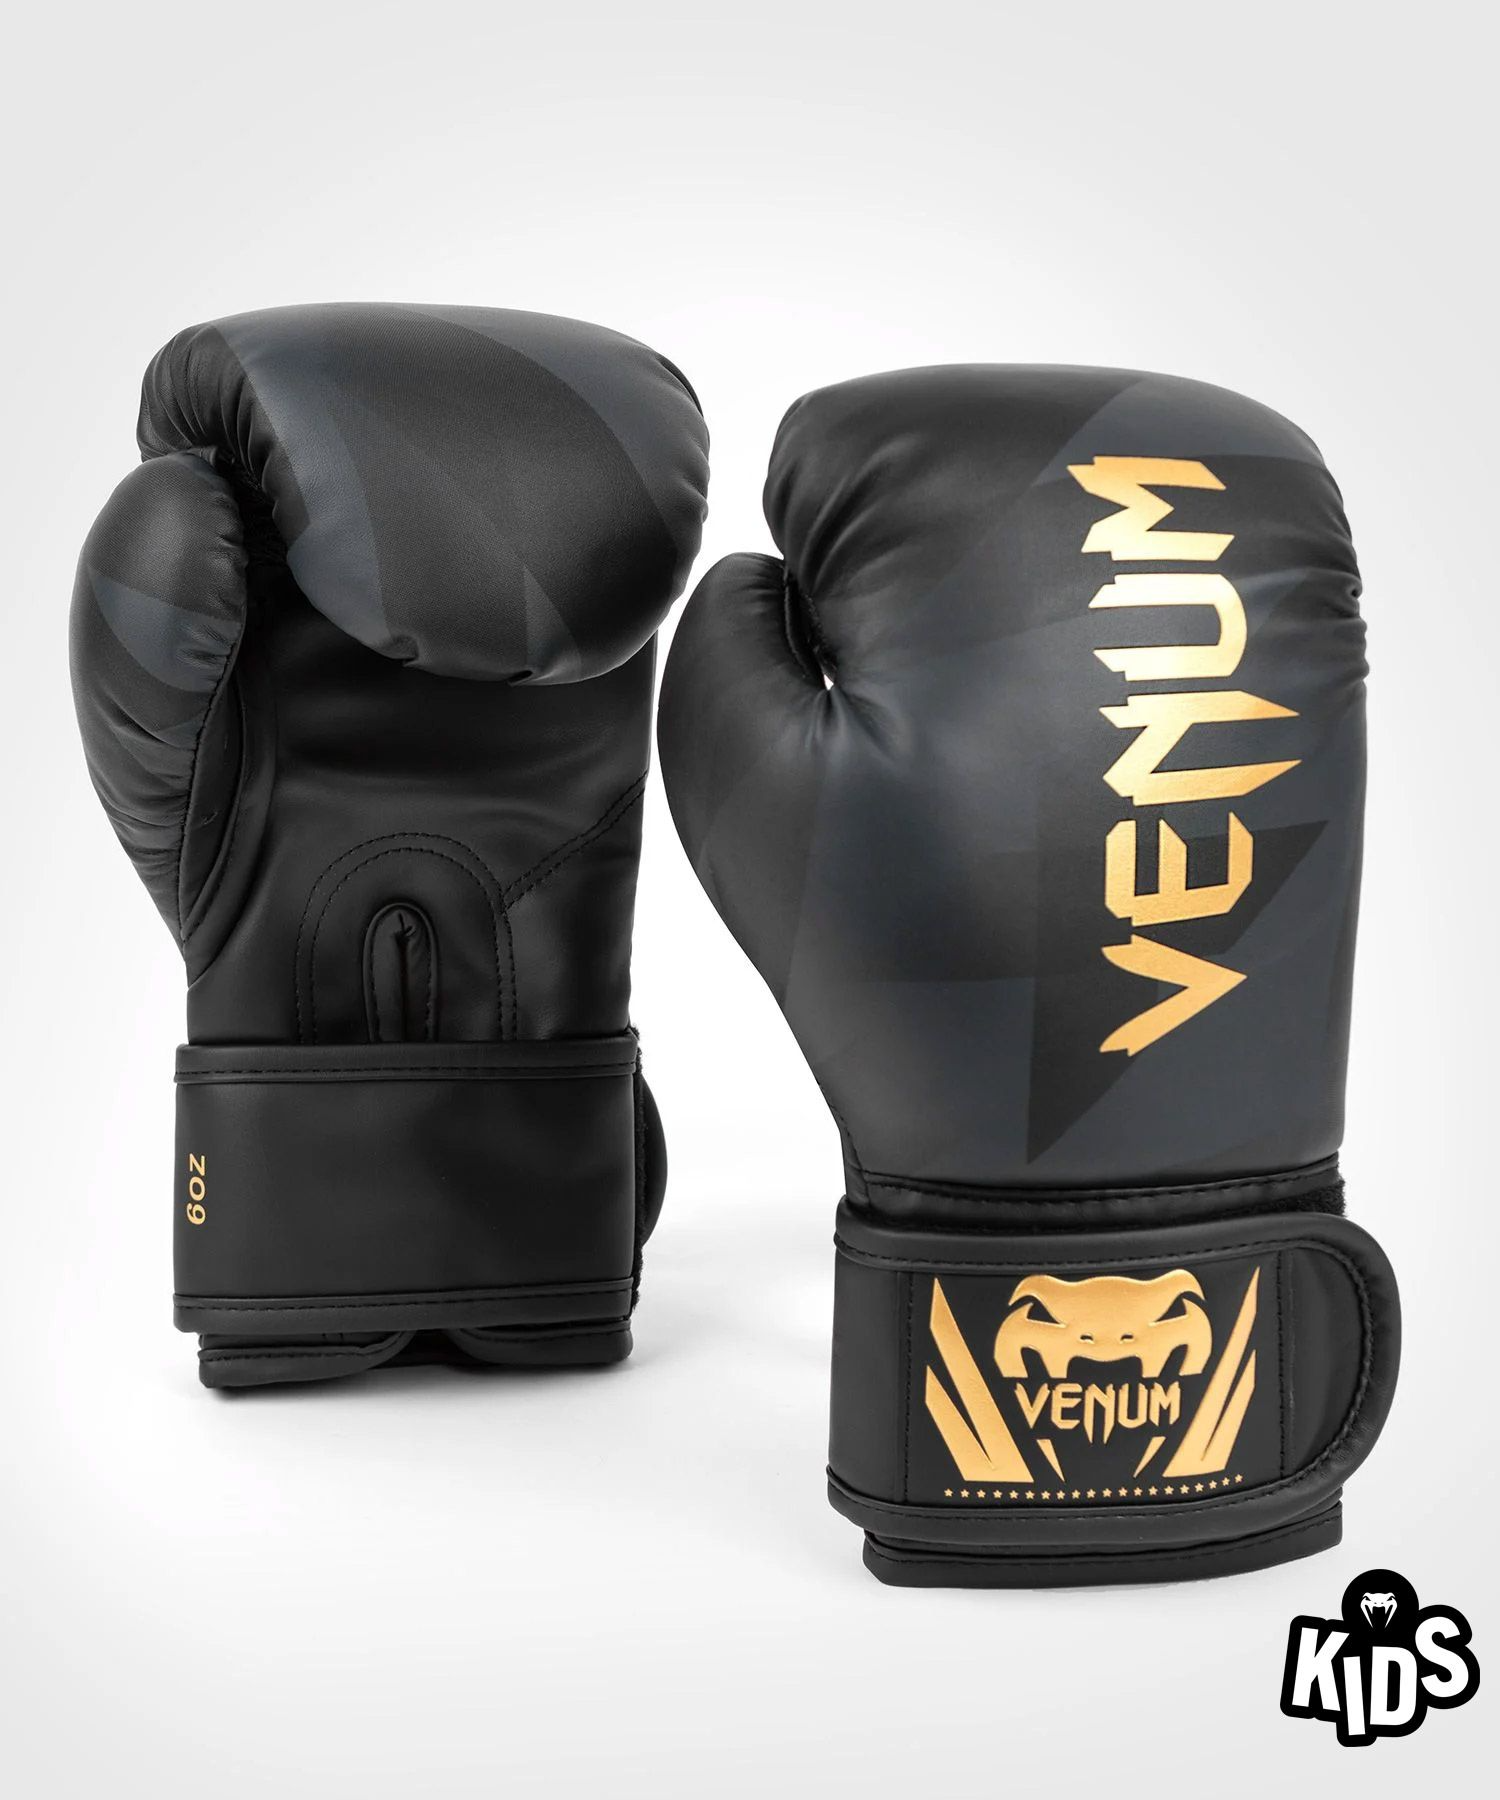 Venum Razor Kids Boxing Gloves - Black/Gold